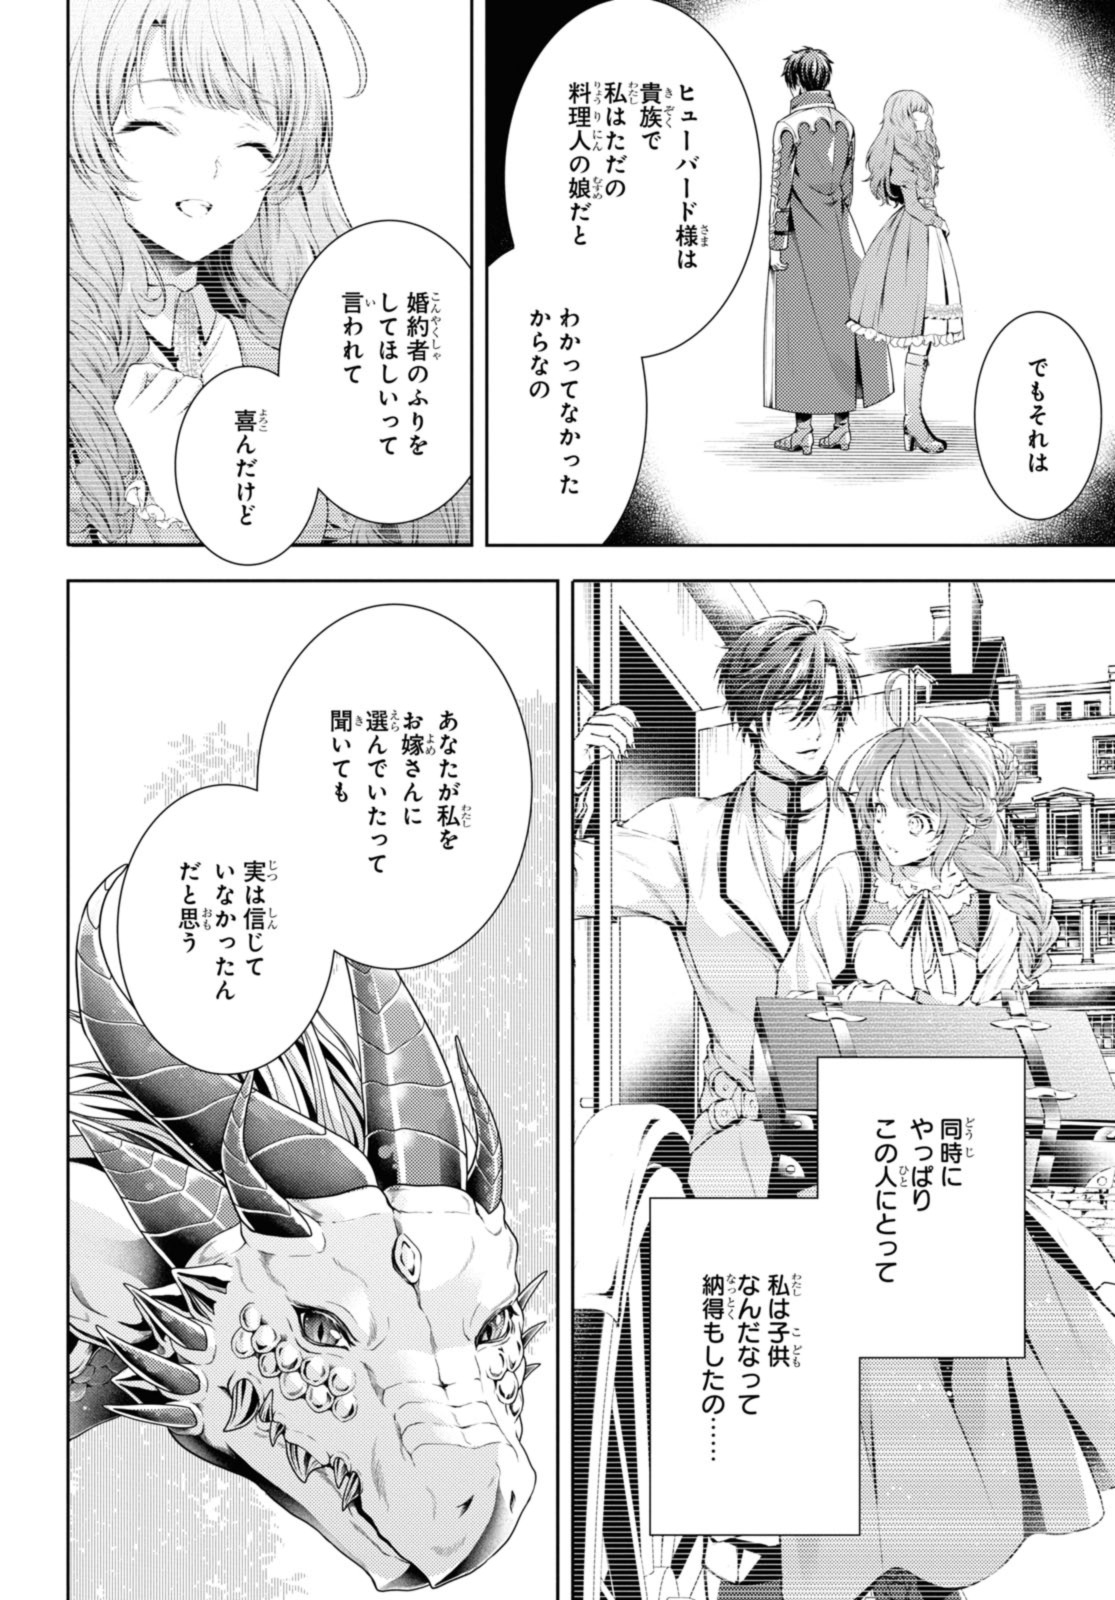 Ryukishi no Okiniiri - Chapter 45.2 - Page 6